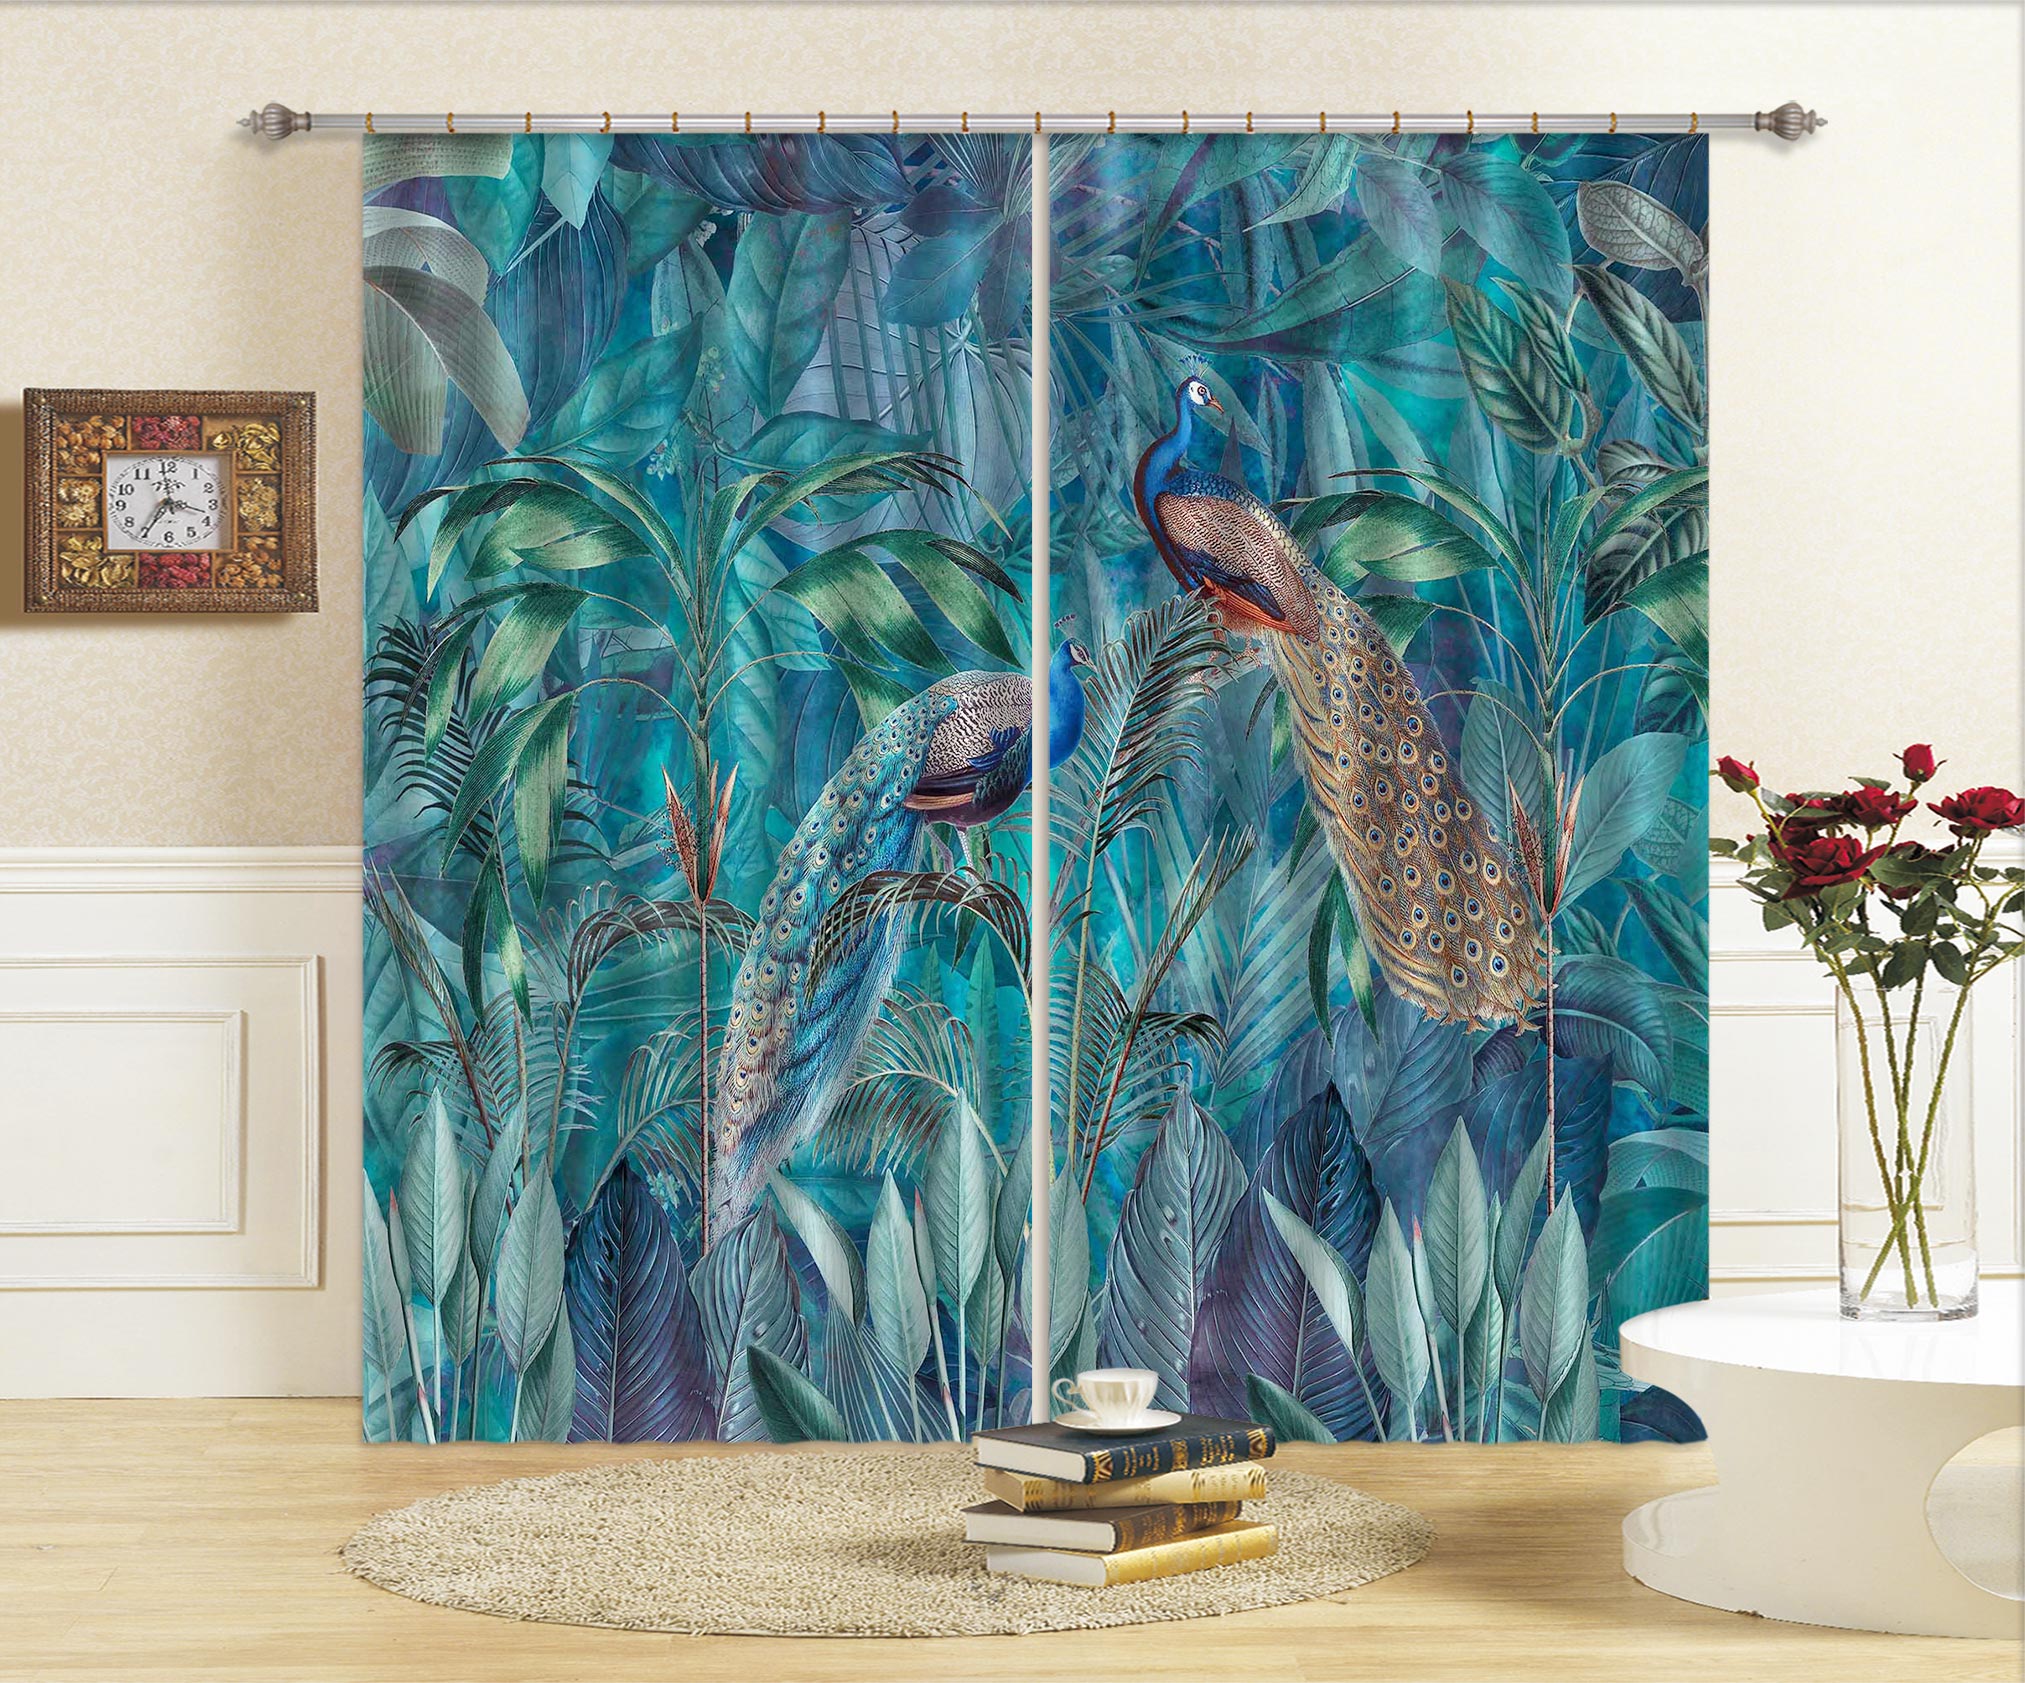 3D Peacock Plant 016 Andrea haase Curtain Curtains Drapes